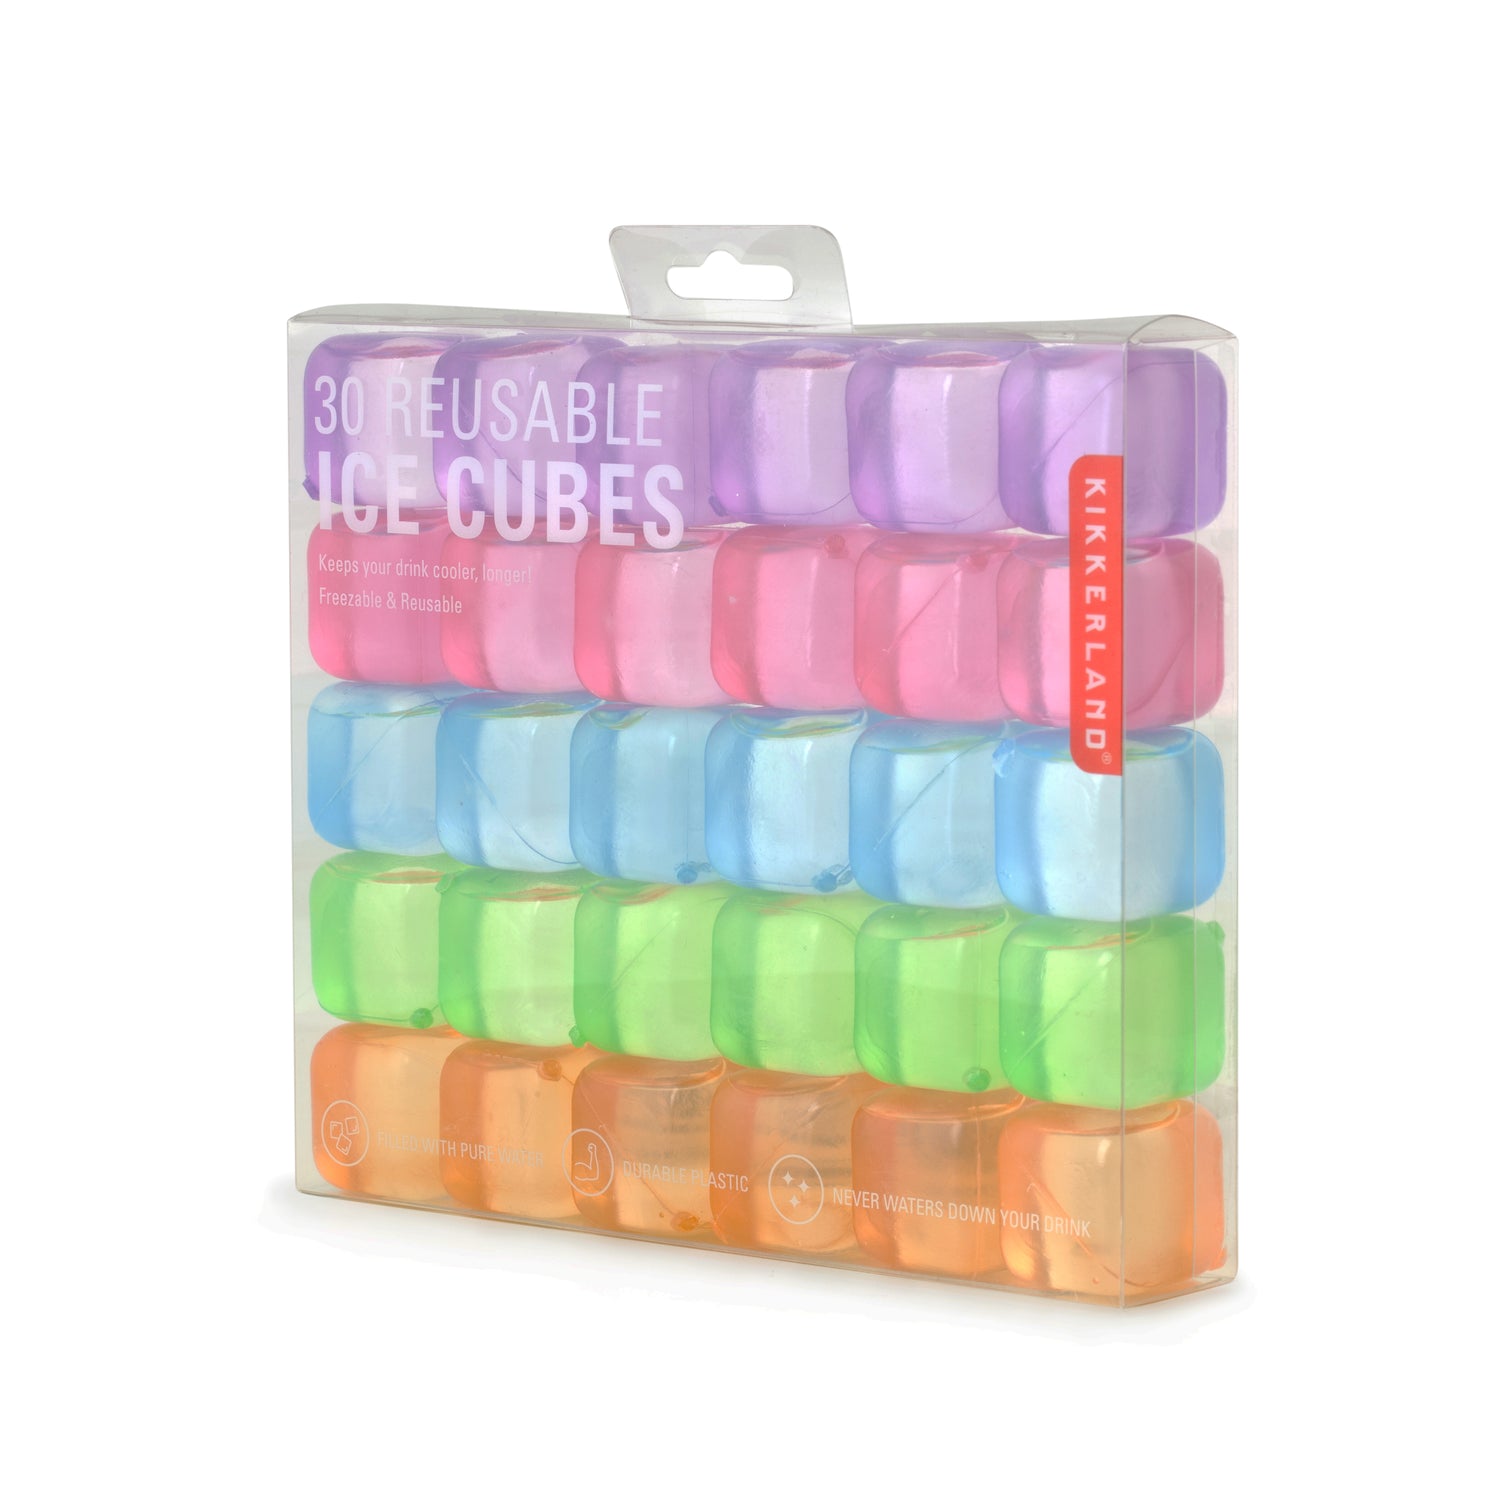 Reusable Ice Cubes